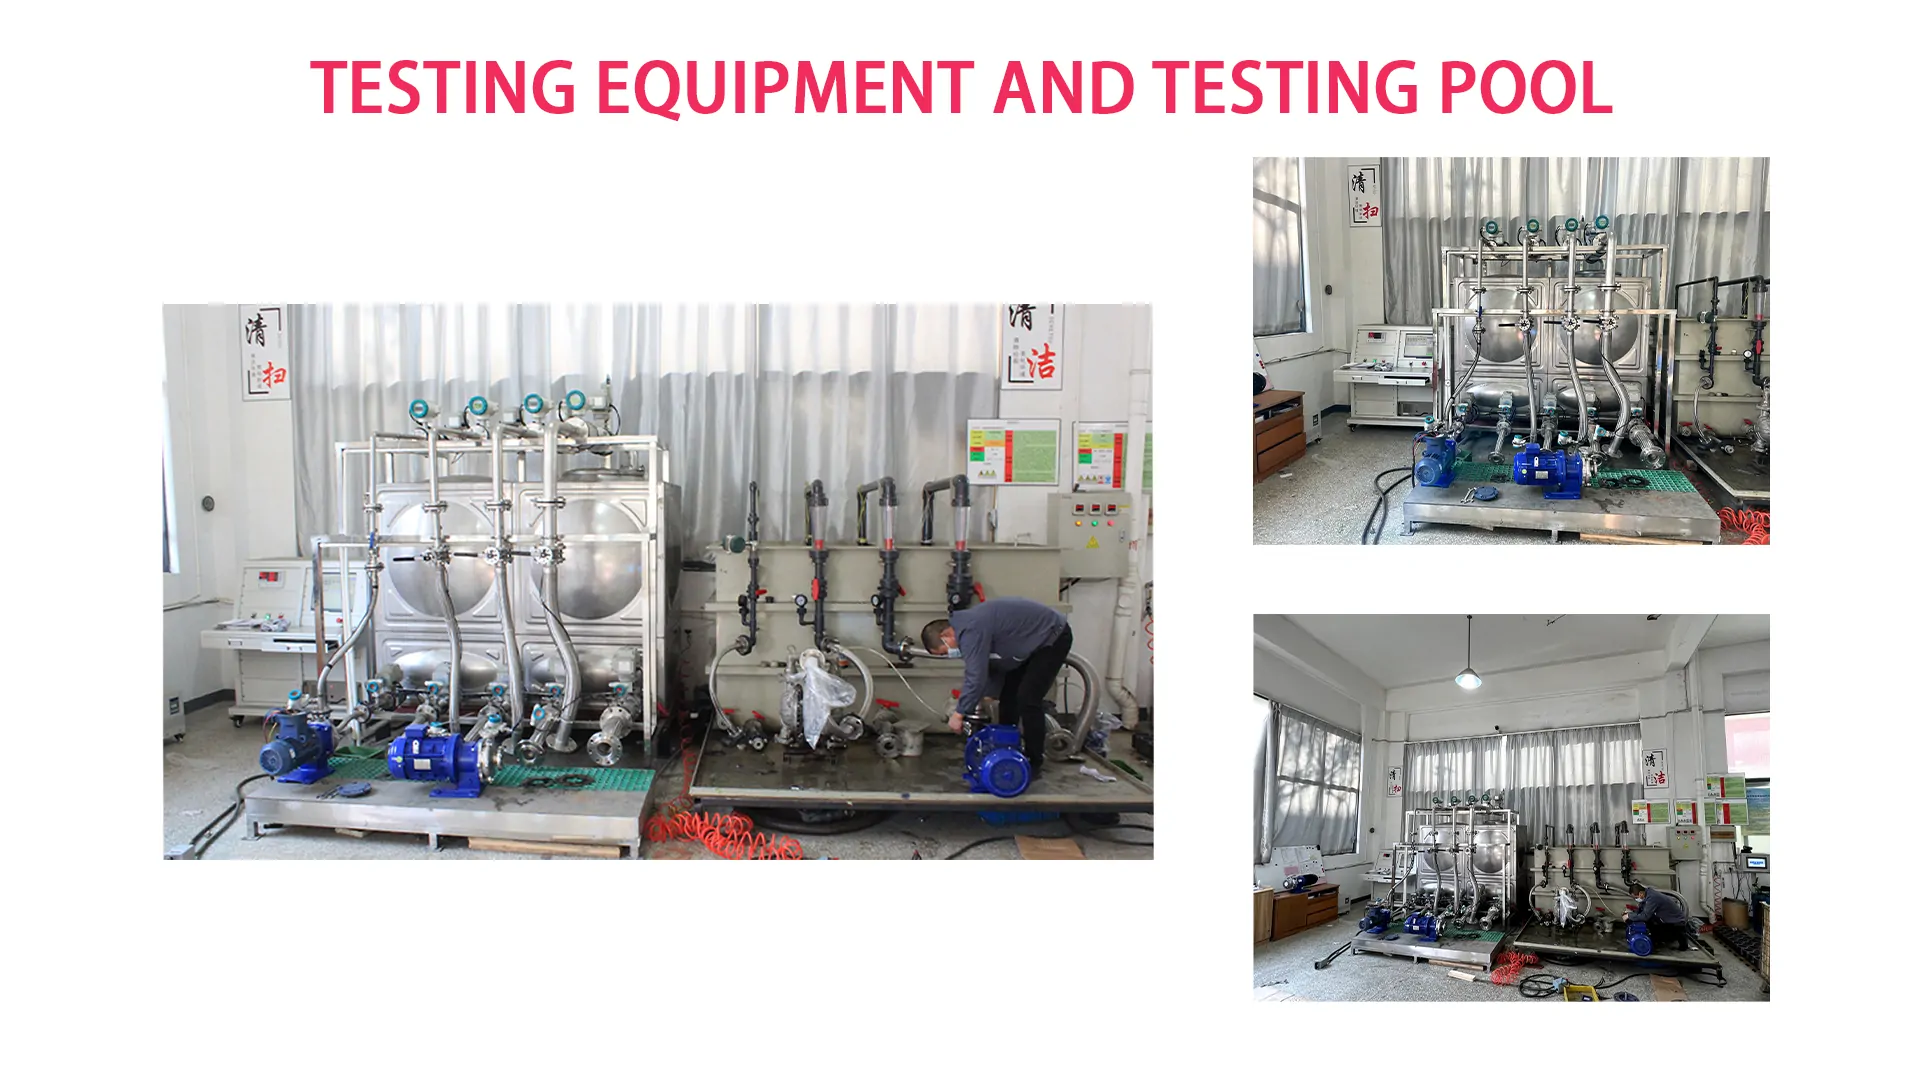 Pump Test Equipment